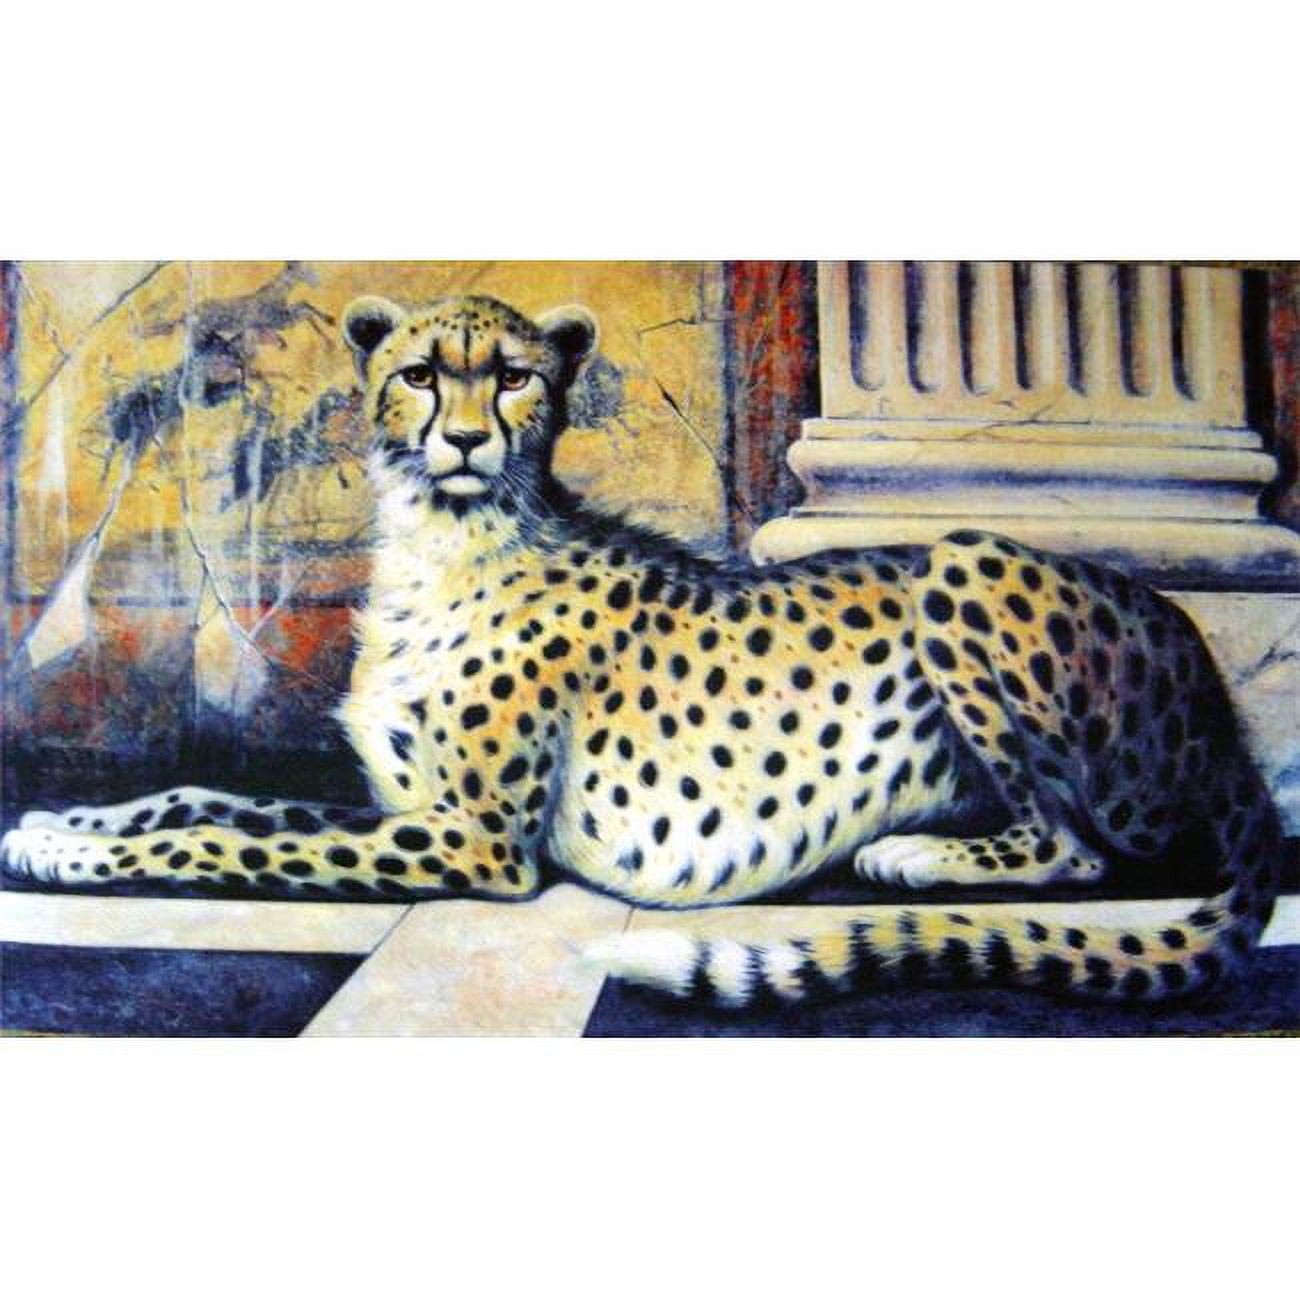 Awv051 Cheetah 18 X 30 In. Doormat Rug - Brown, Brown & Tan, Gold & Yellow